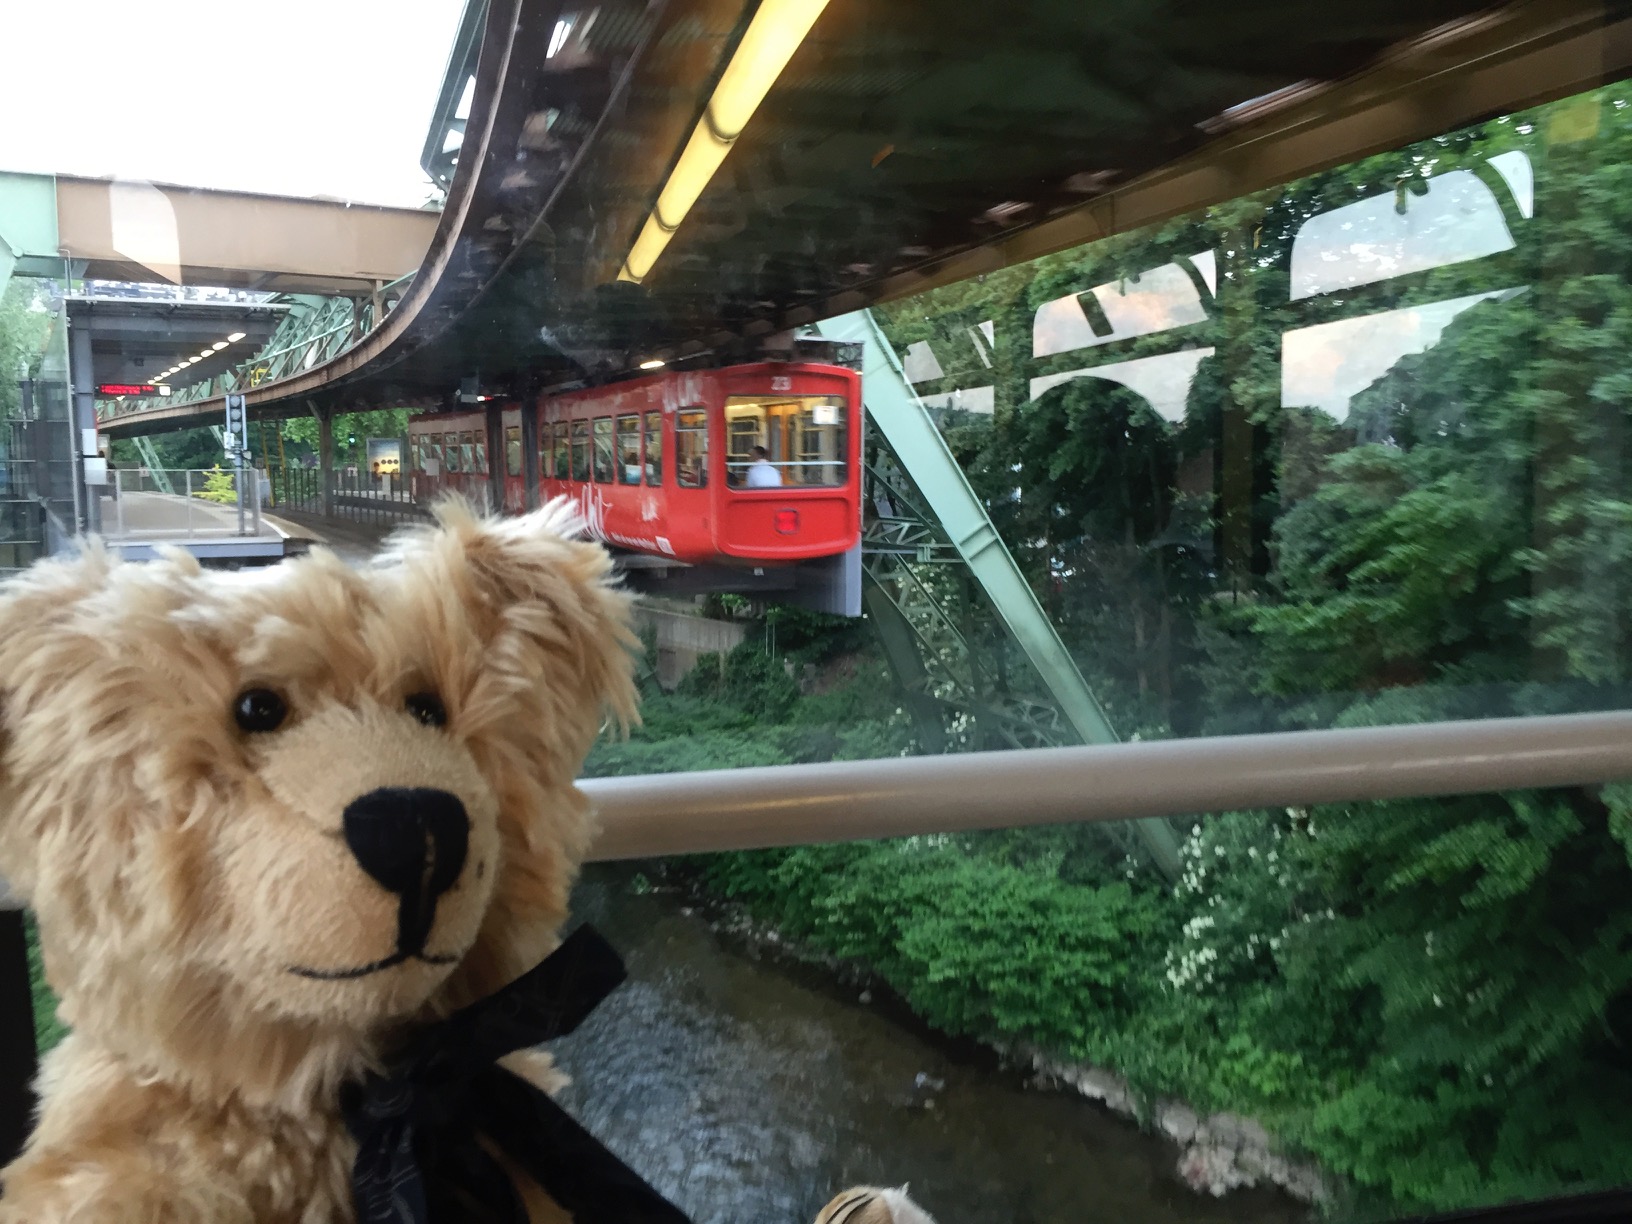 Teddy Bears' Picnic: Wuppertal Schwebebahn... upside down railway!